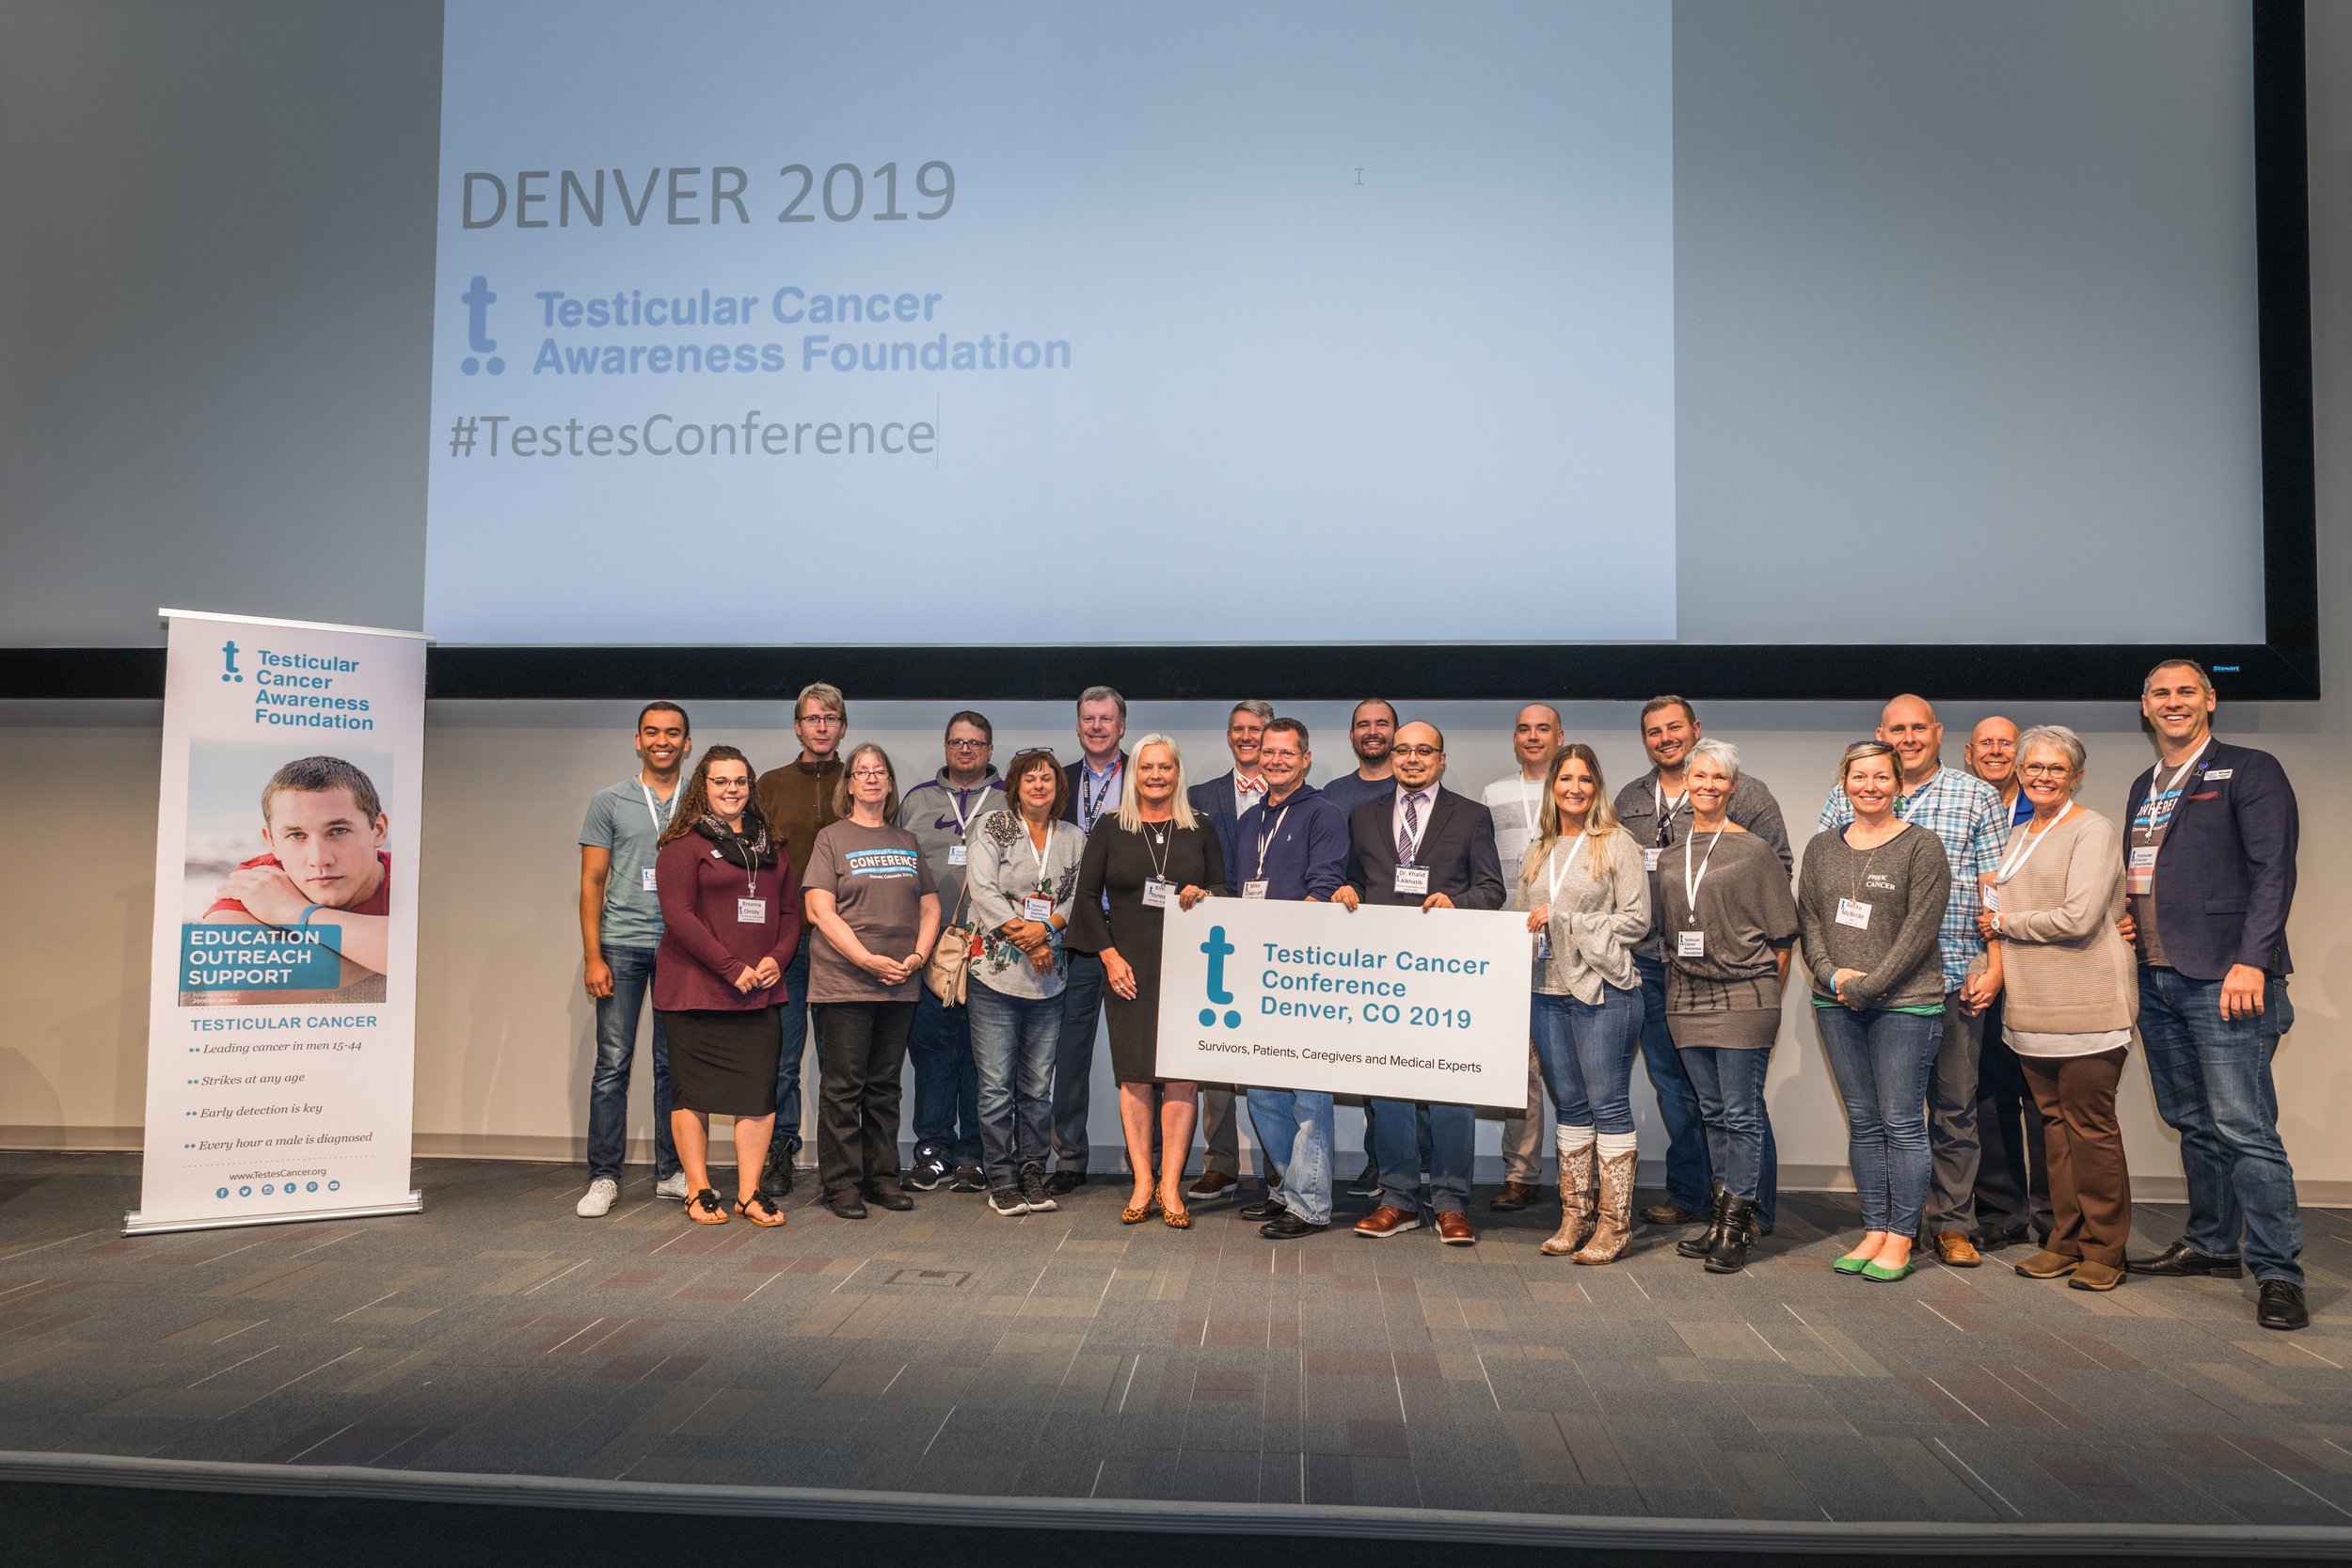 Testicular Cancer Conference Denver 2019 Group Photo on Stage